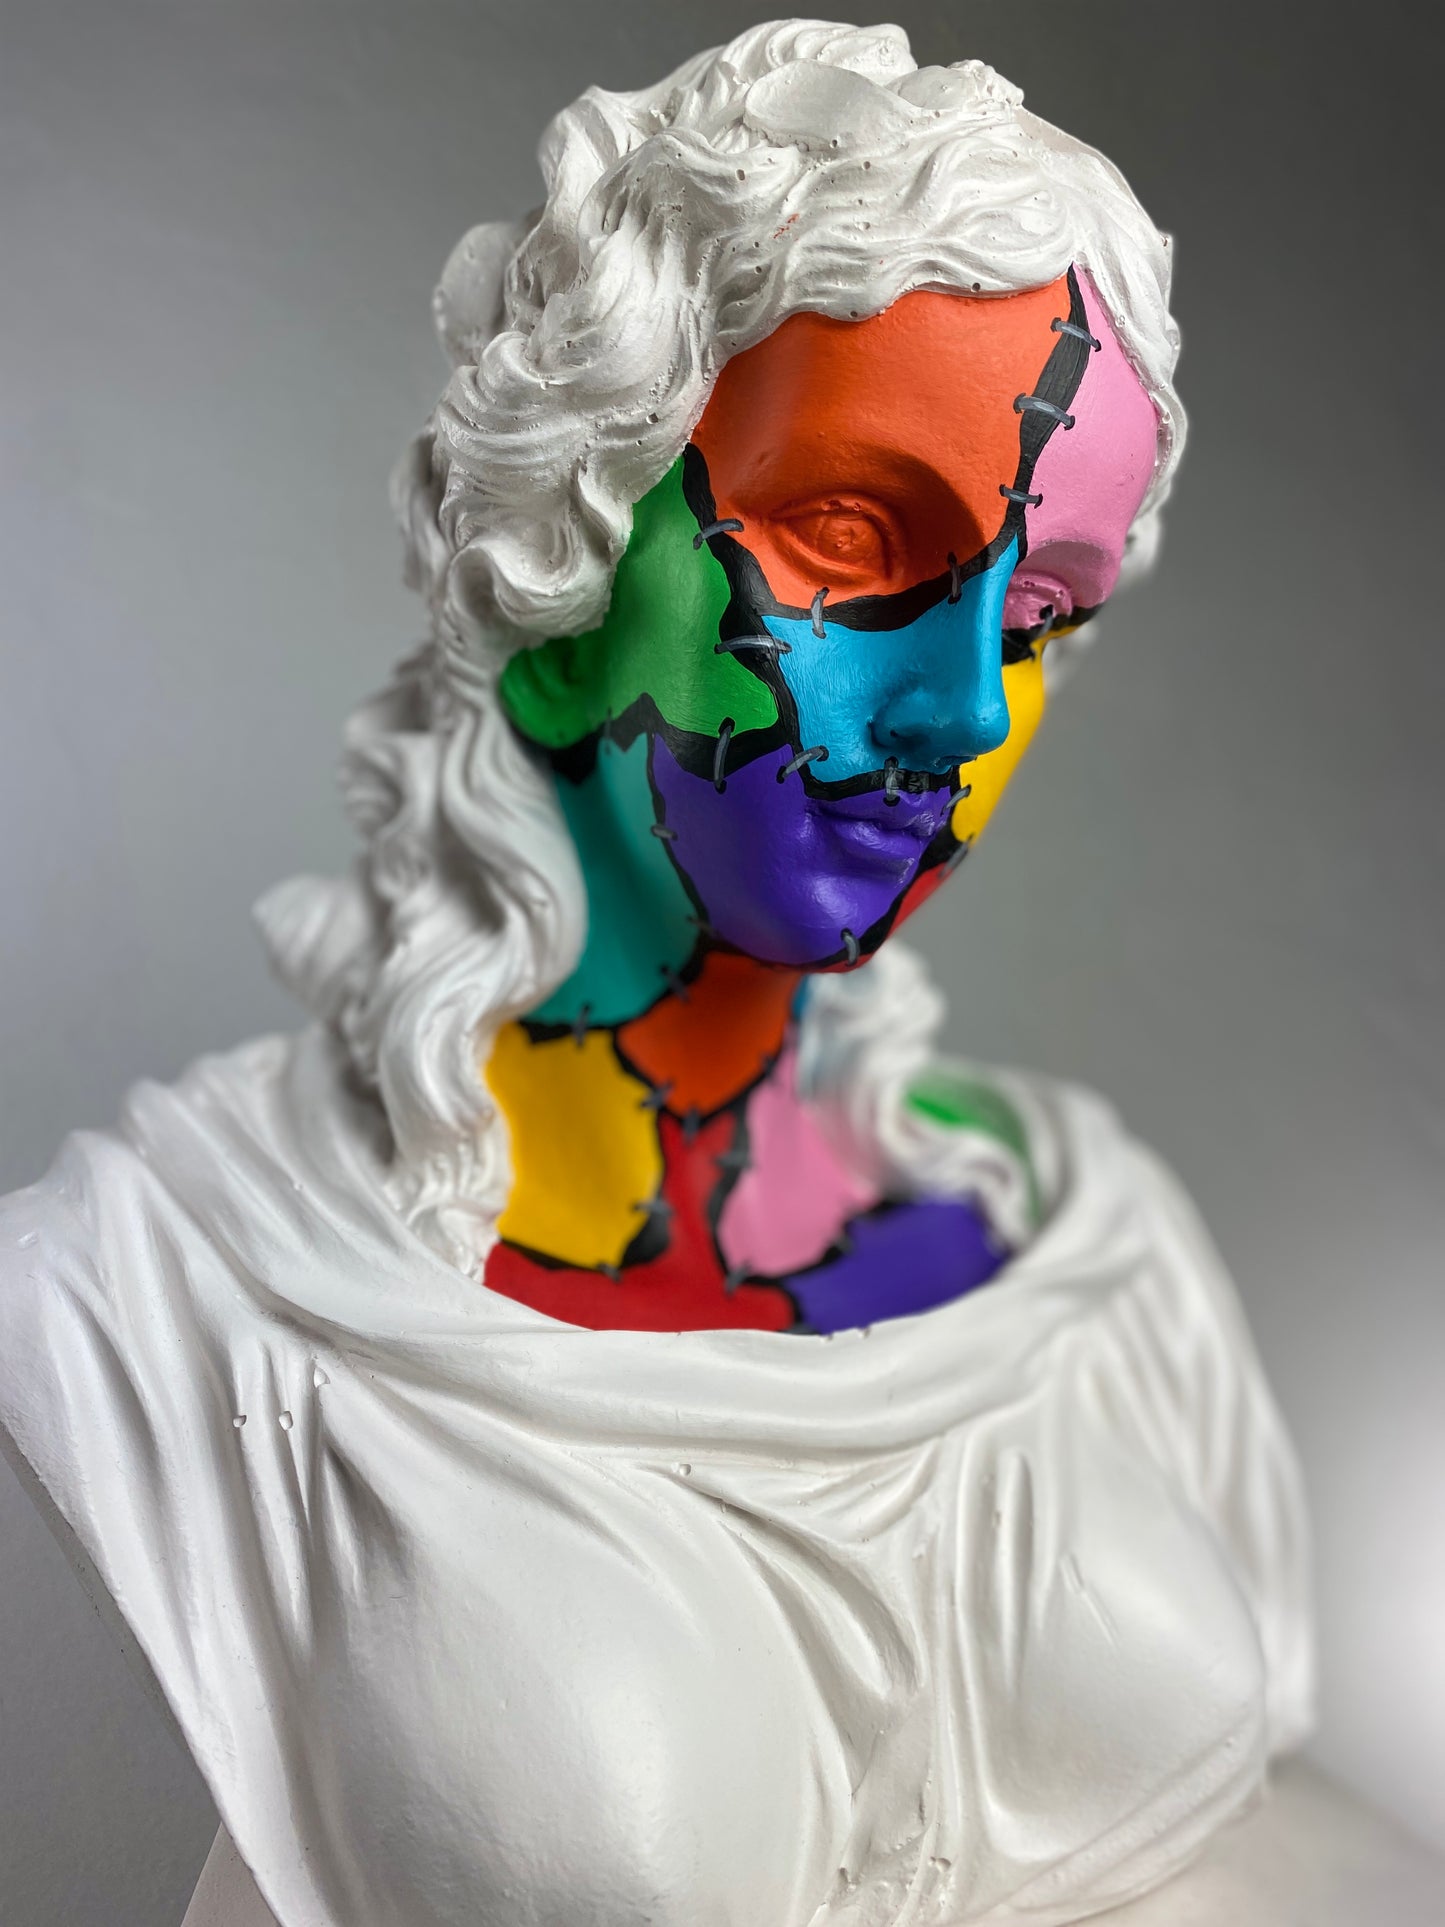 Hera 'White Zombie' Pop Art Sculpture, Modern Home Decor